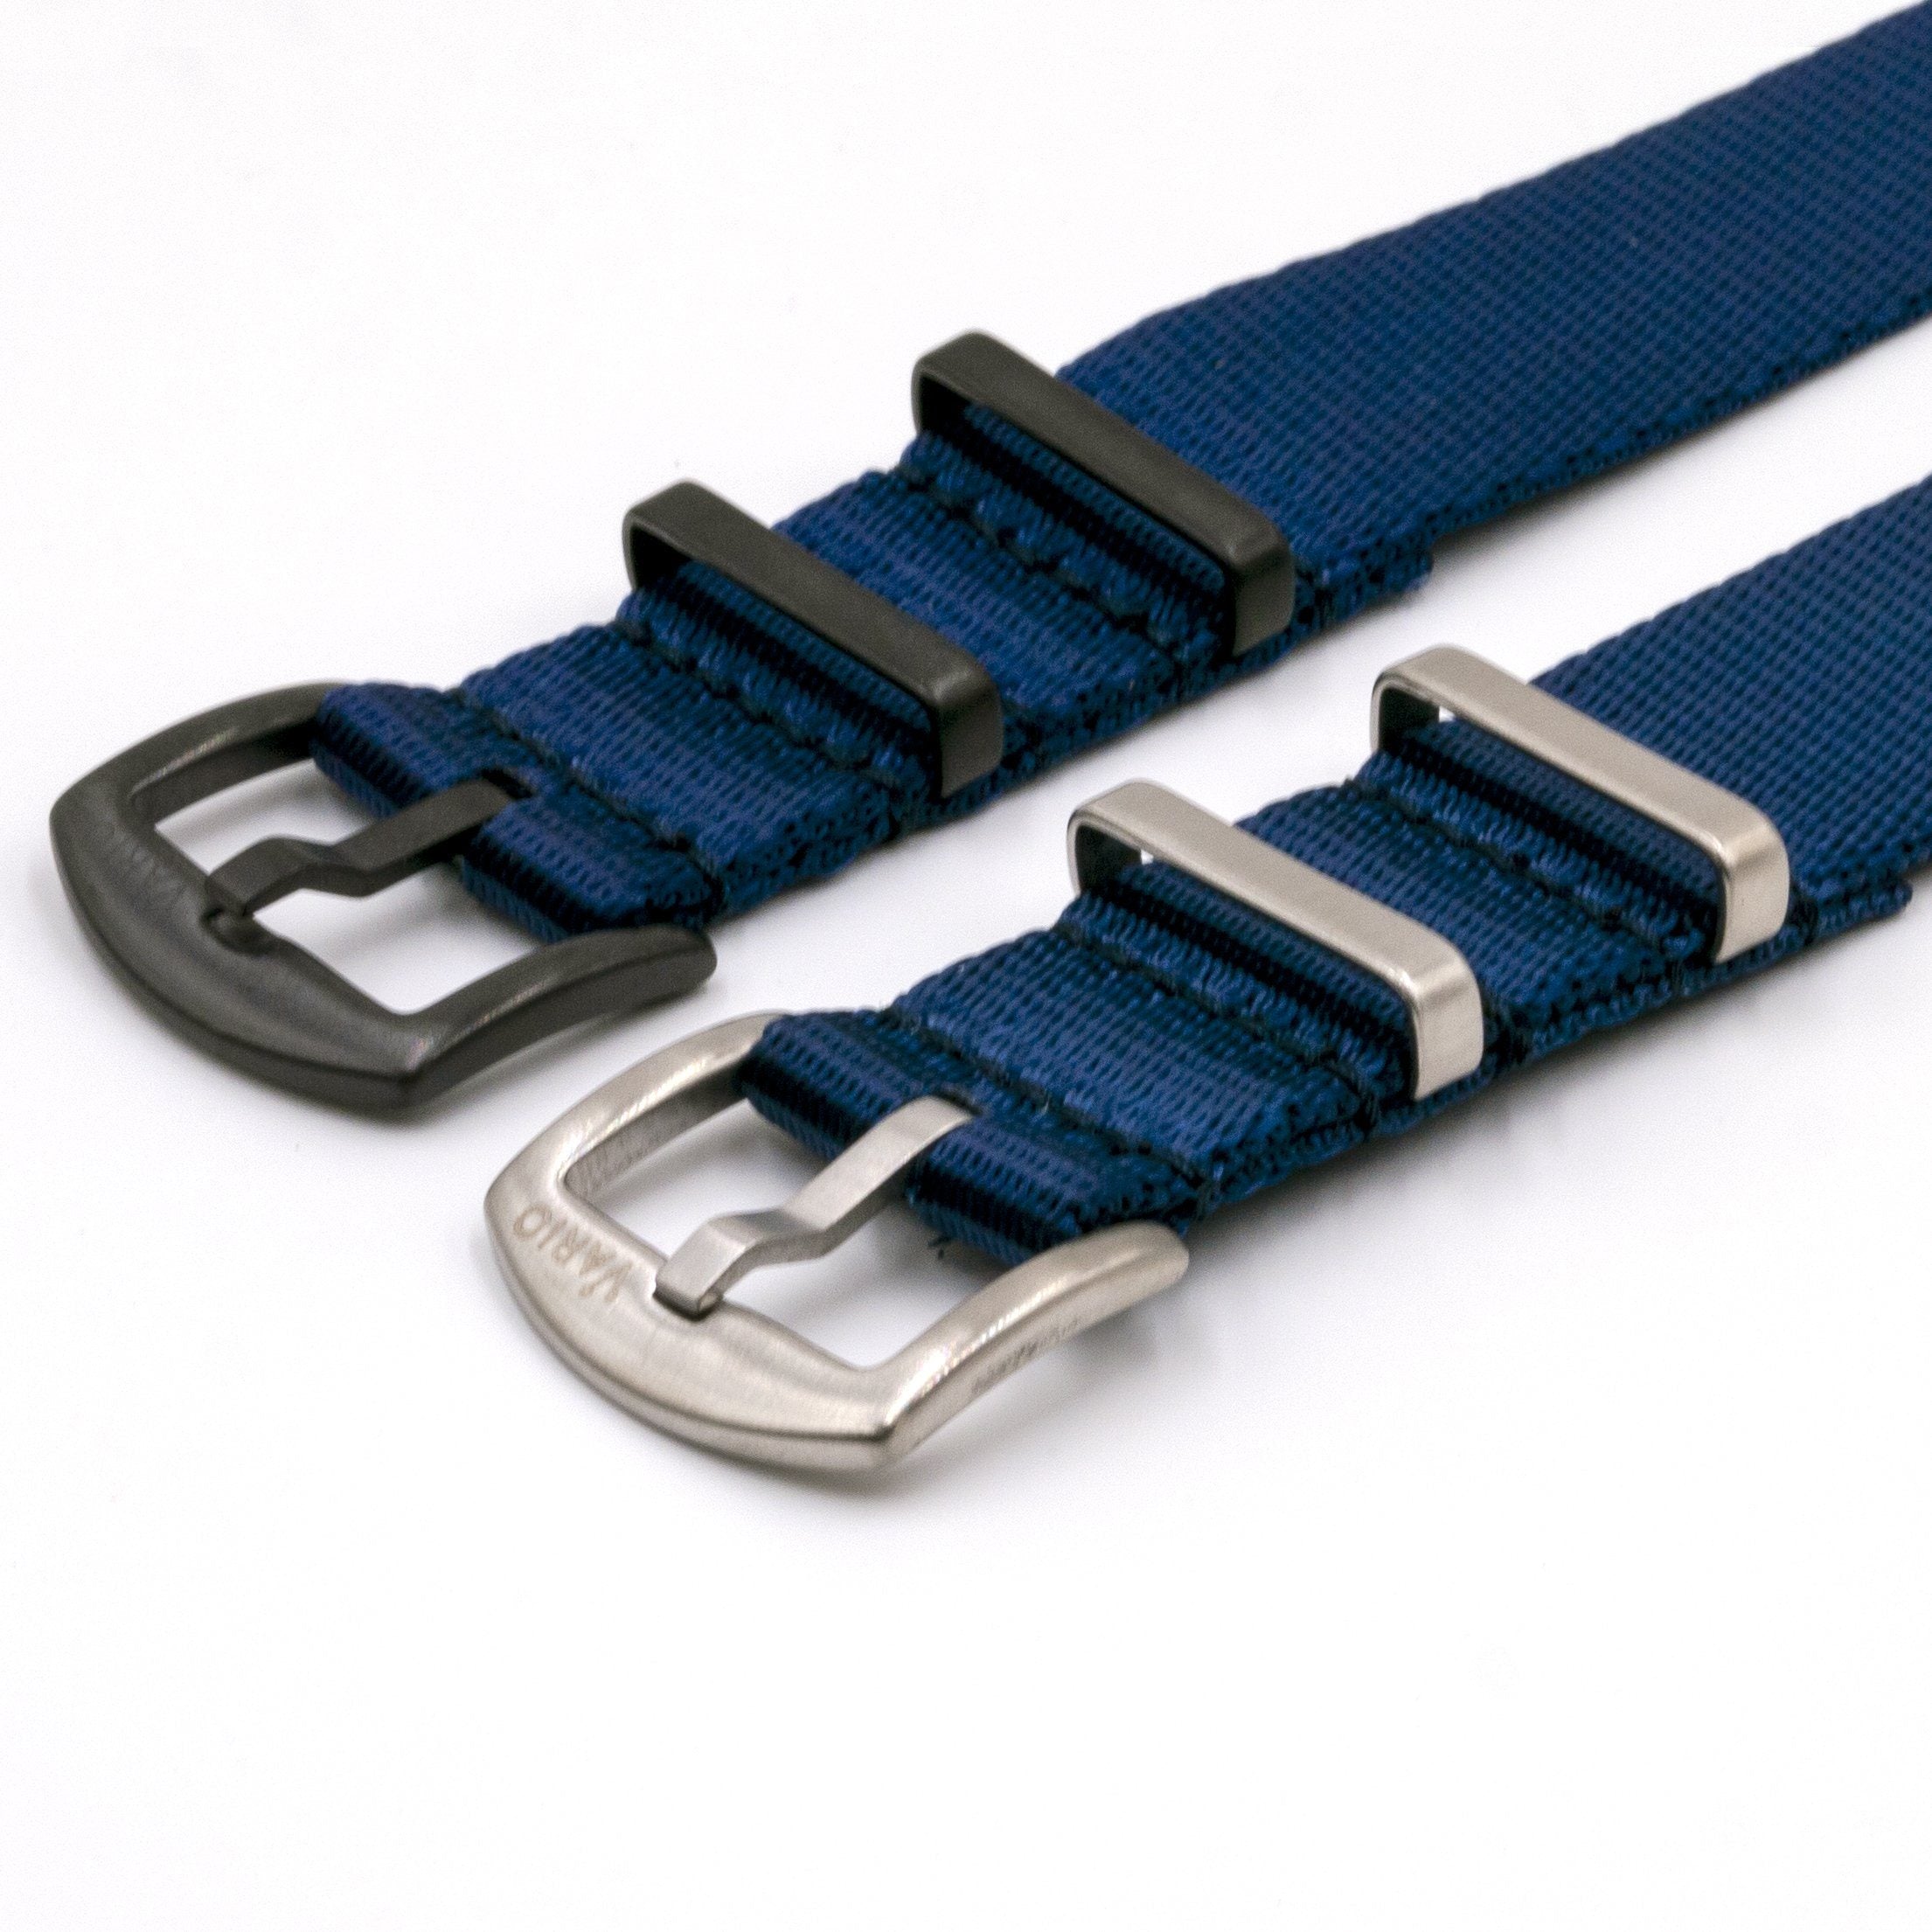 vario gshock seat belt adapter kit navy blue silver black buckle